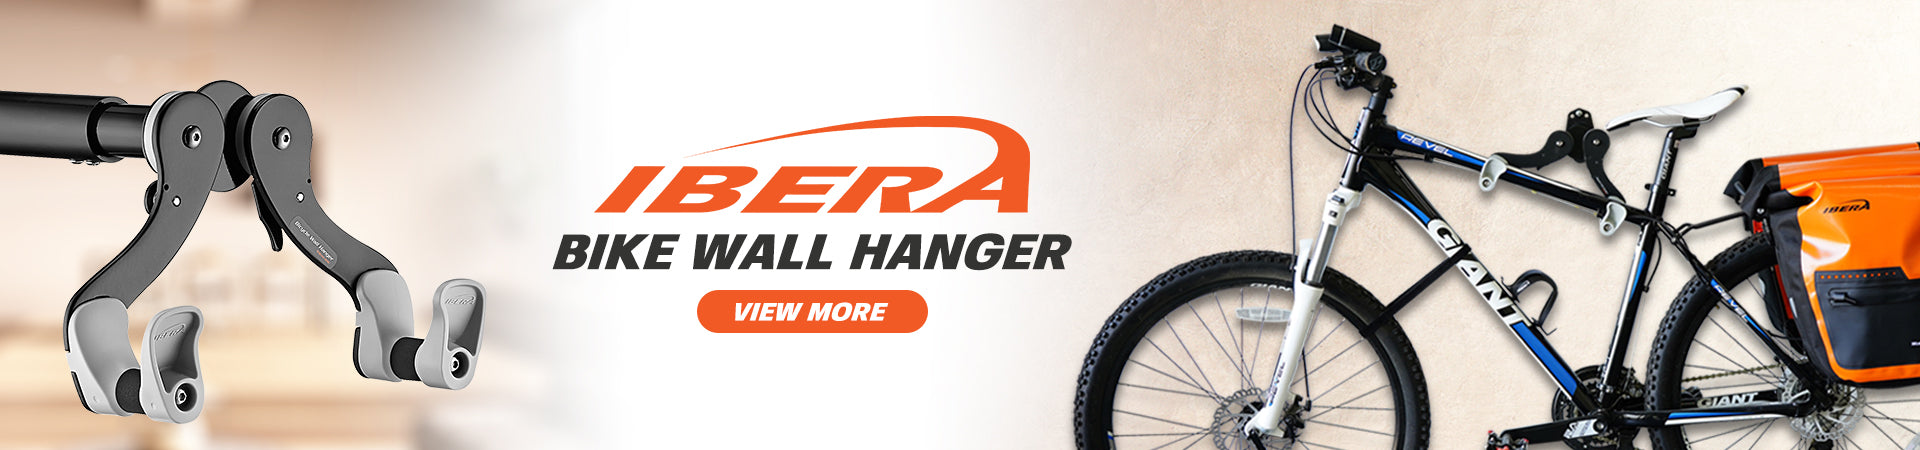 Ibera Bike Wall Hanger